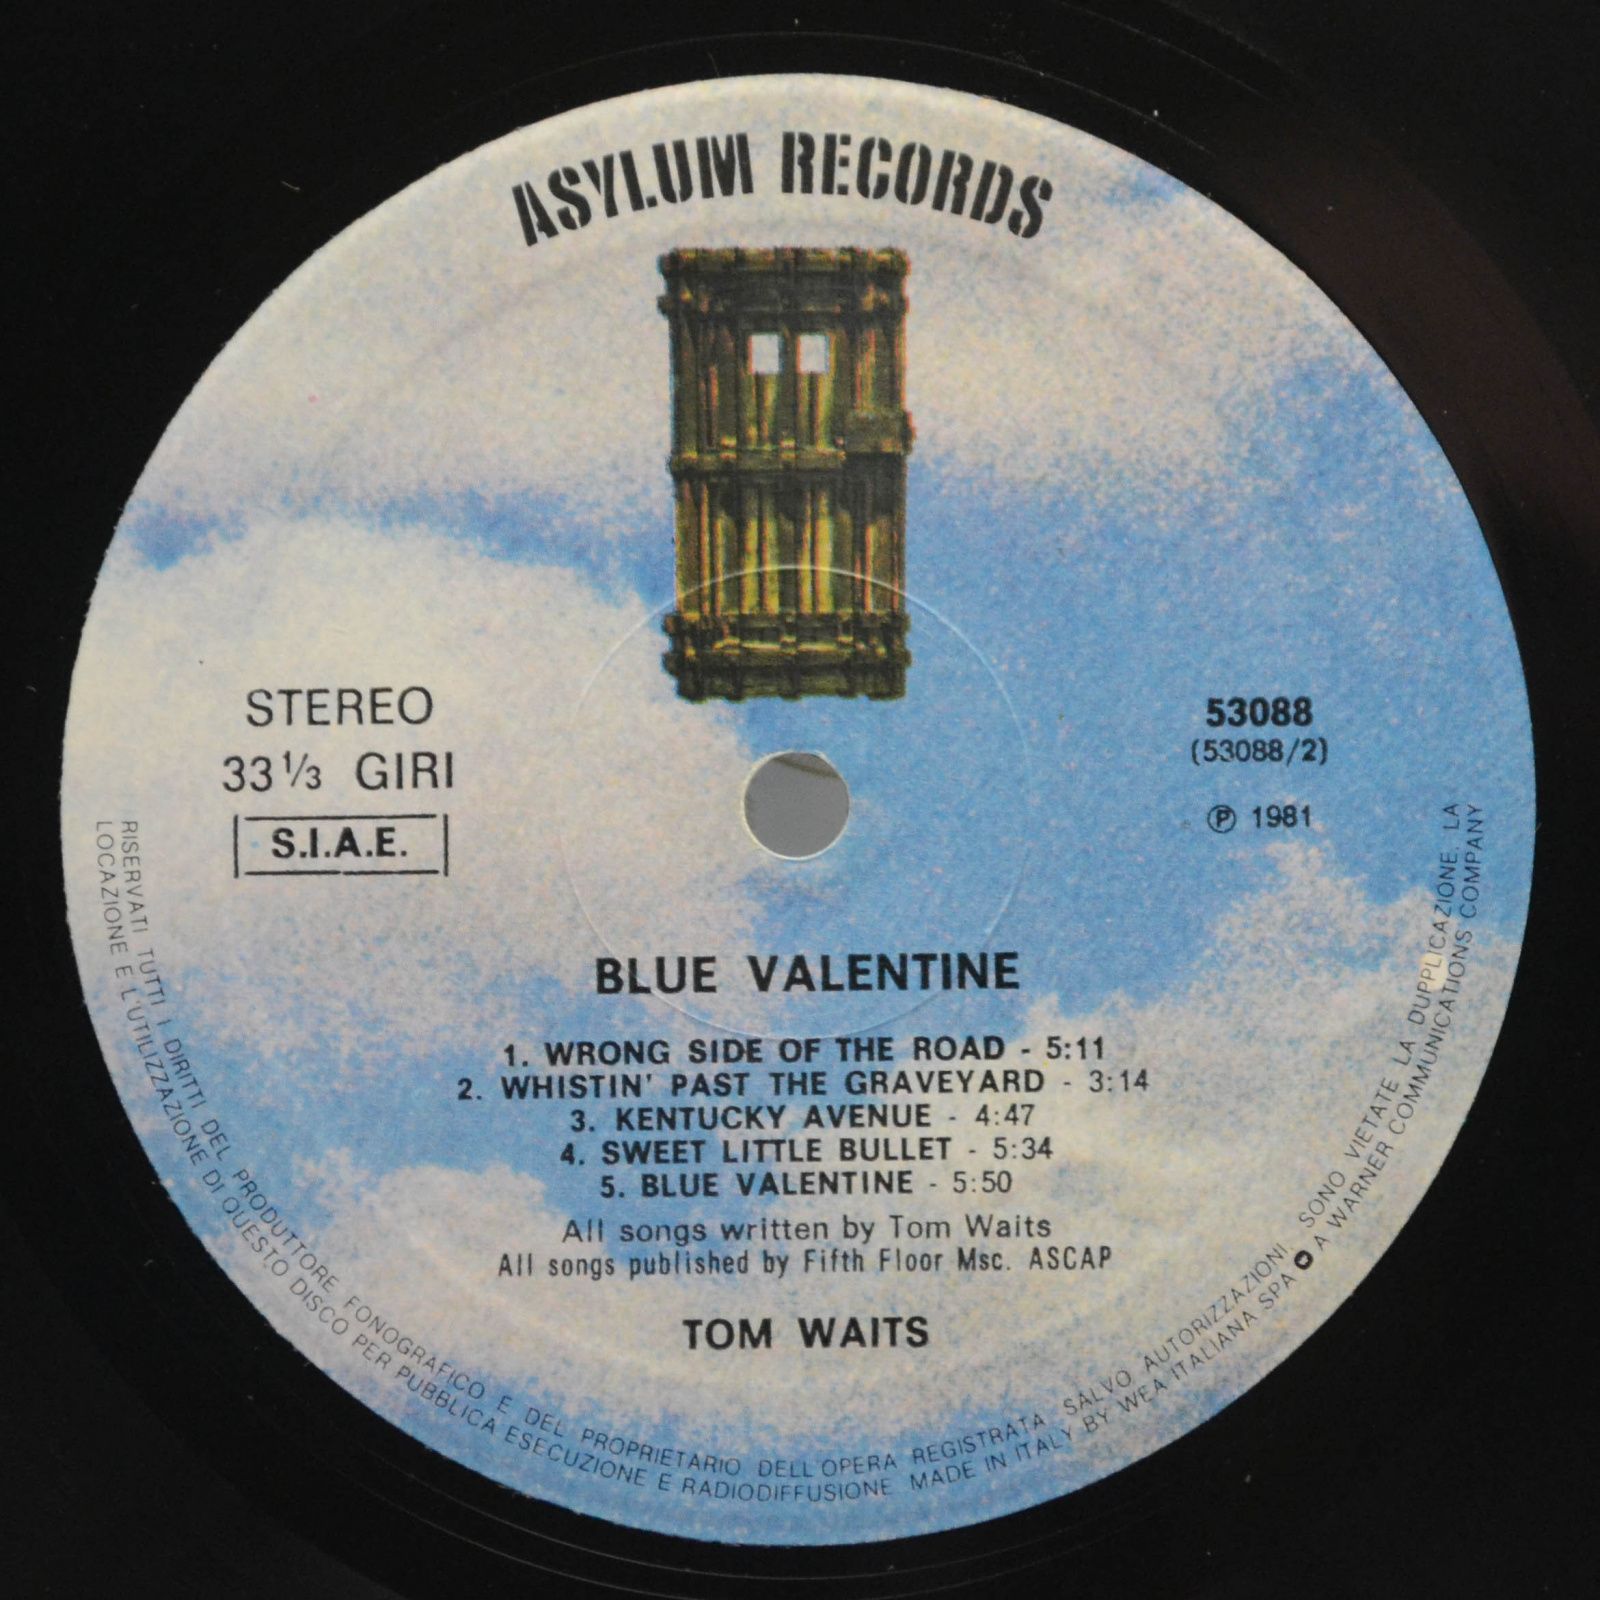 Tom Waits — Blue Valentine, 1978